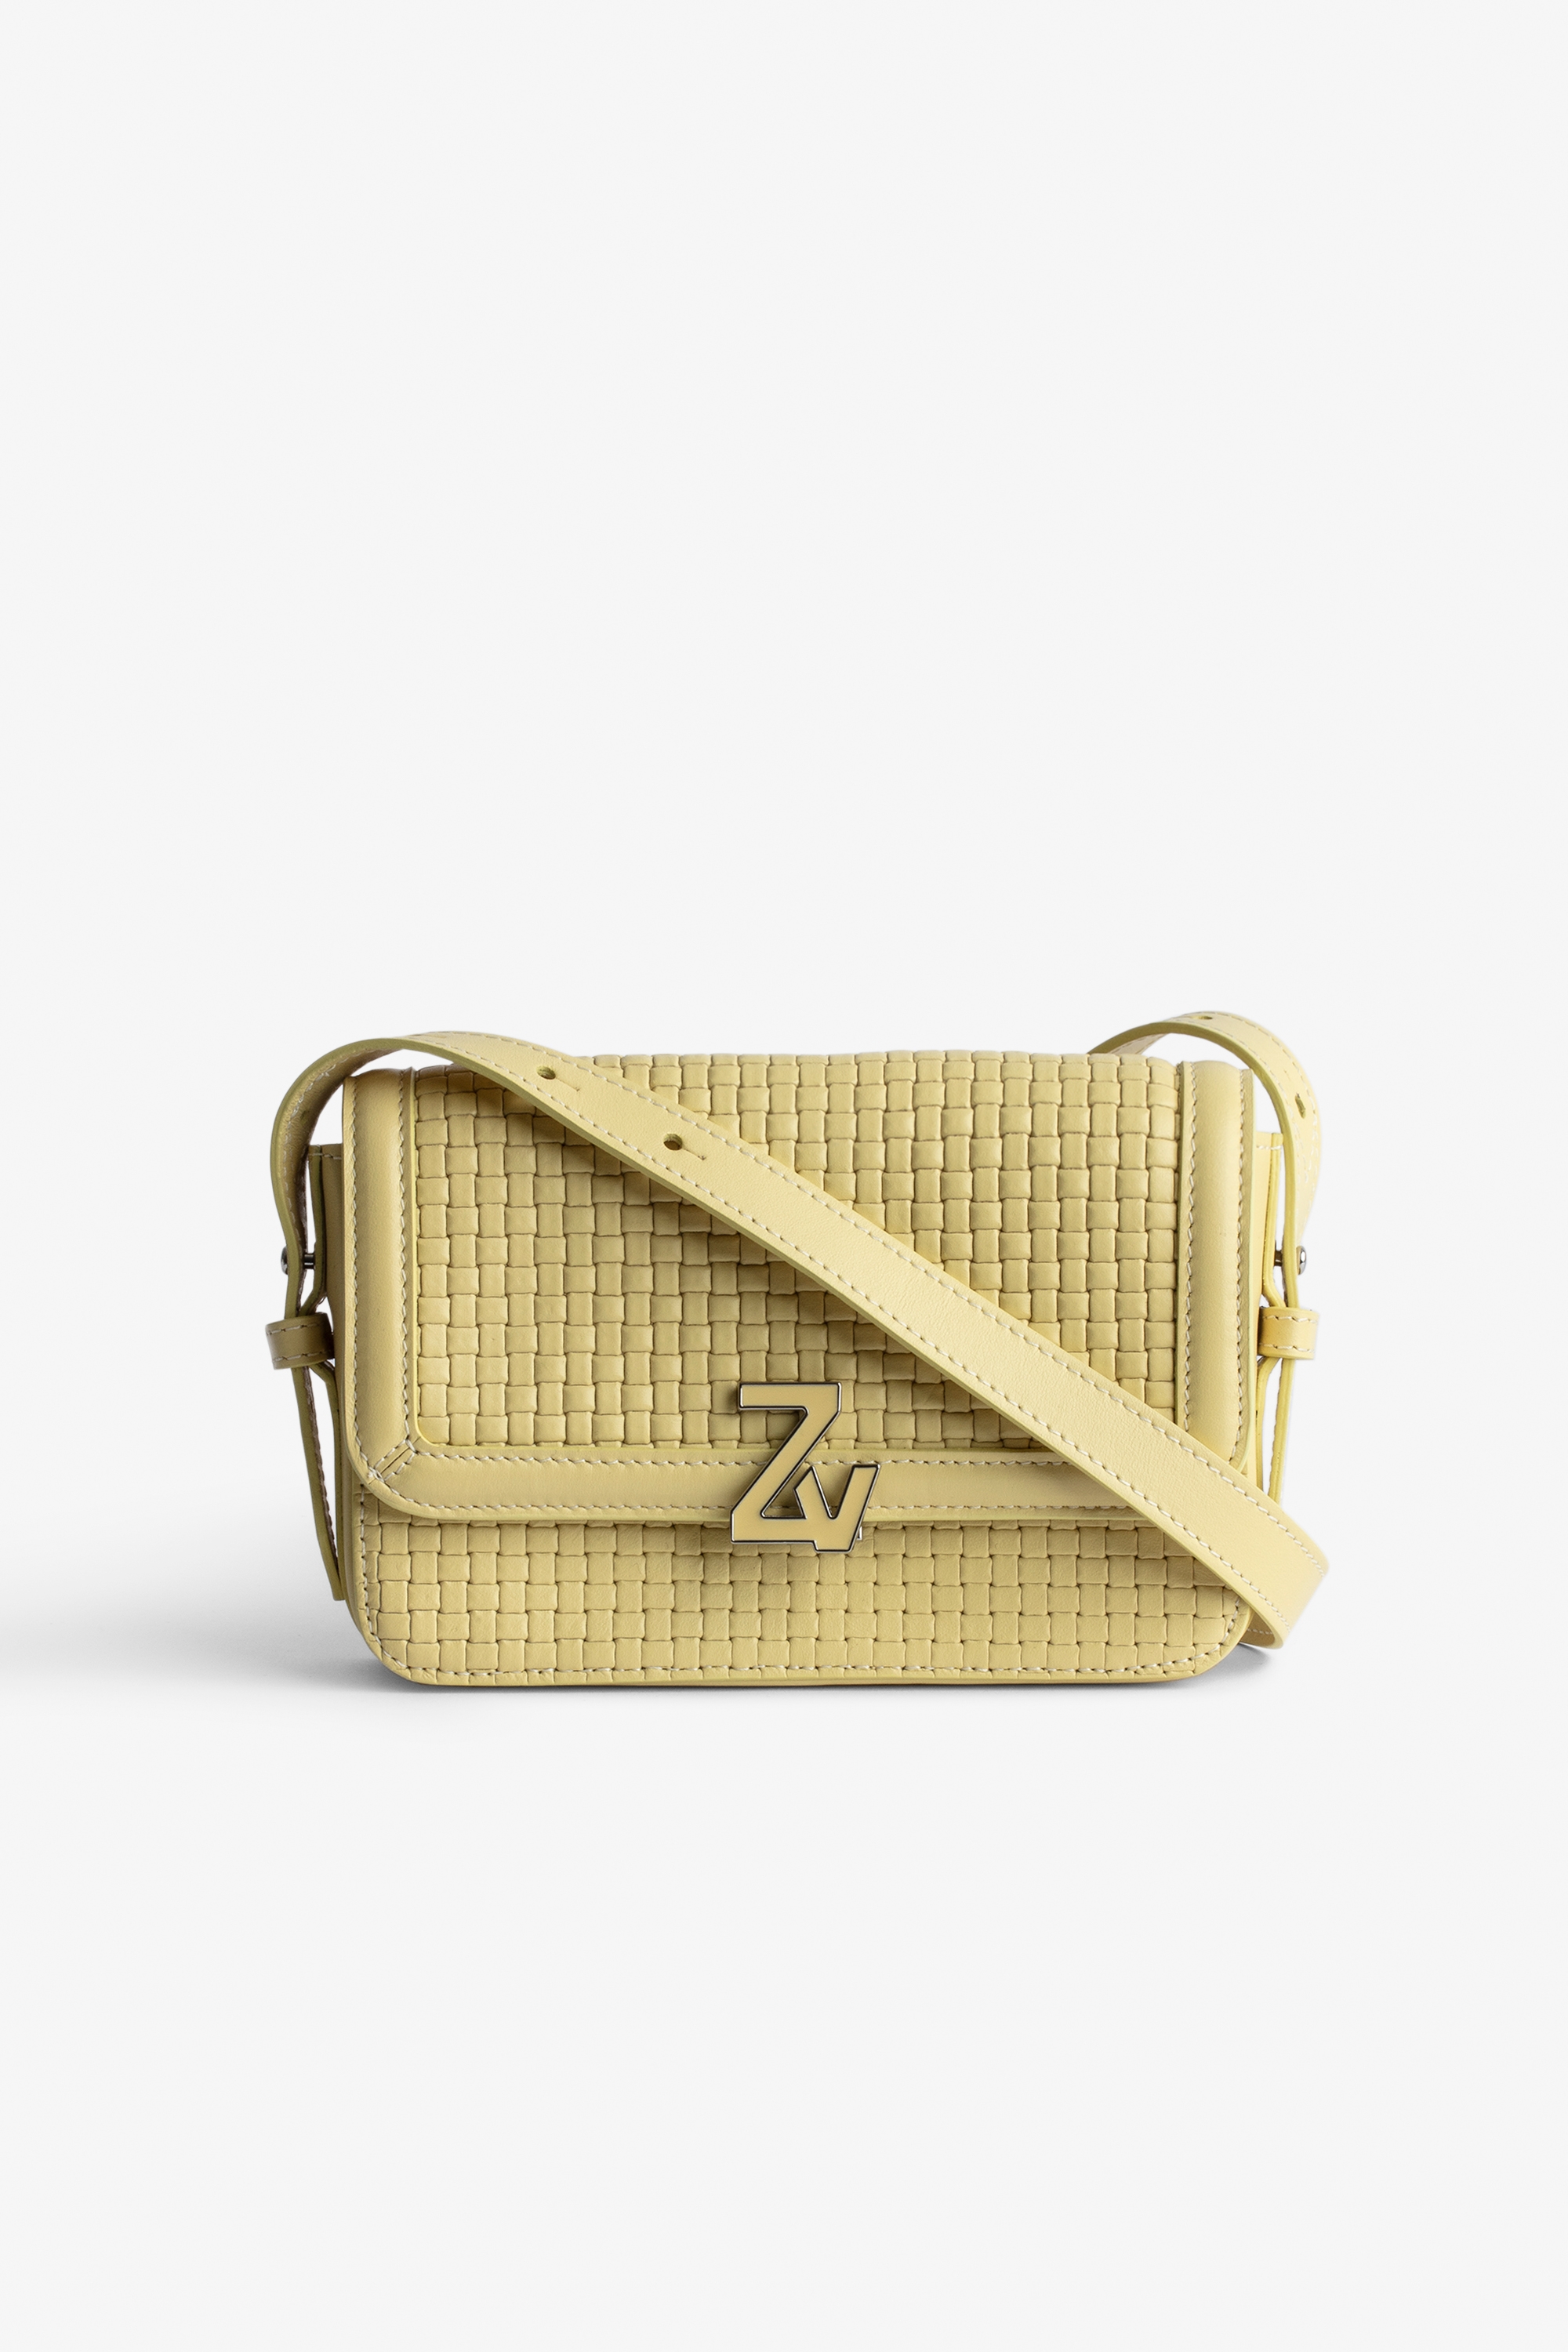 ZV Initiale Bag